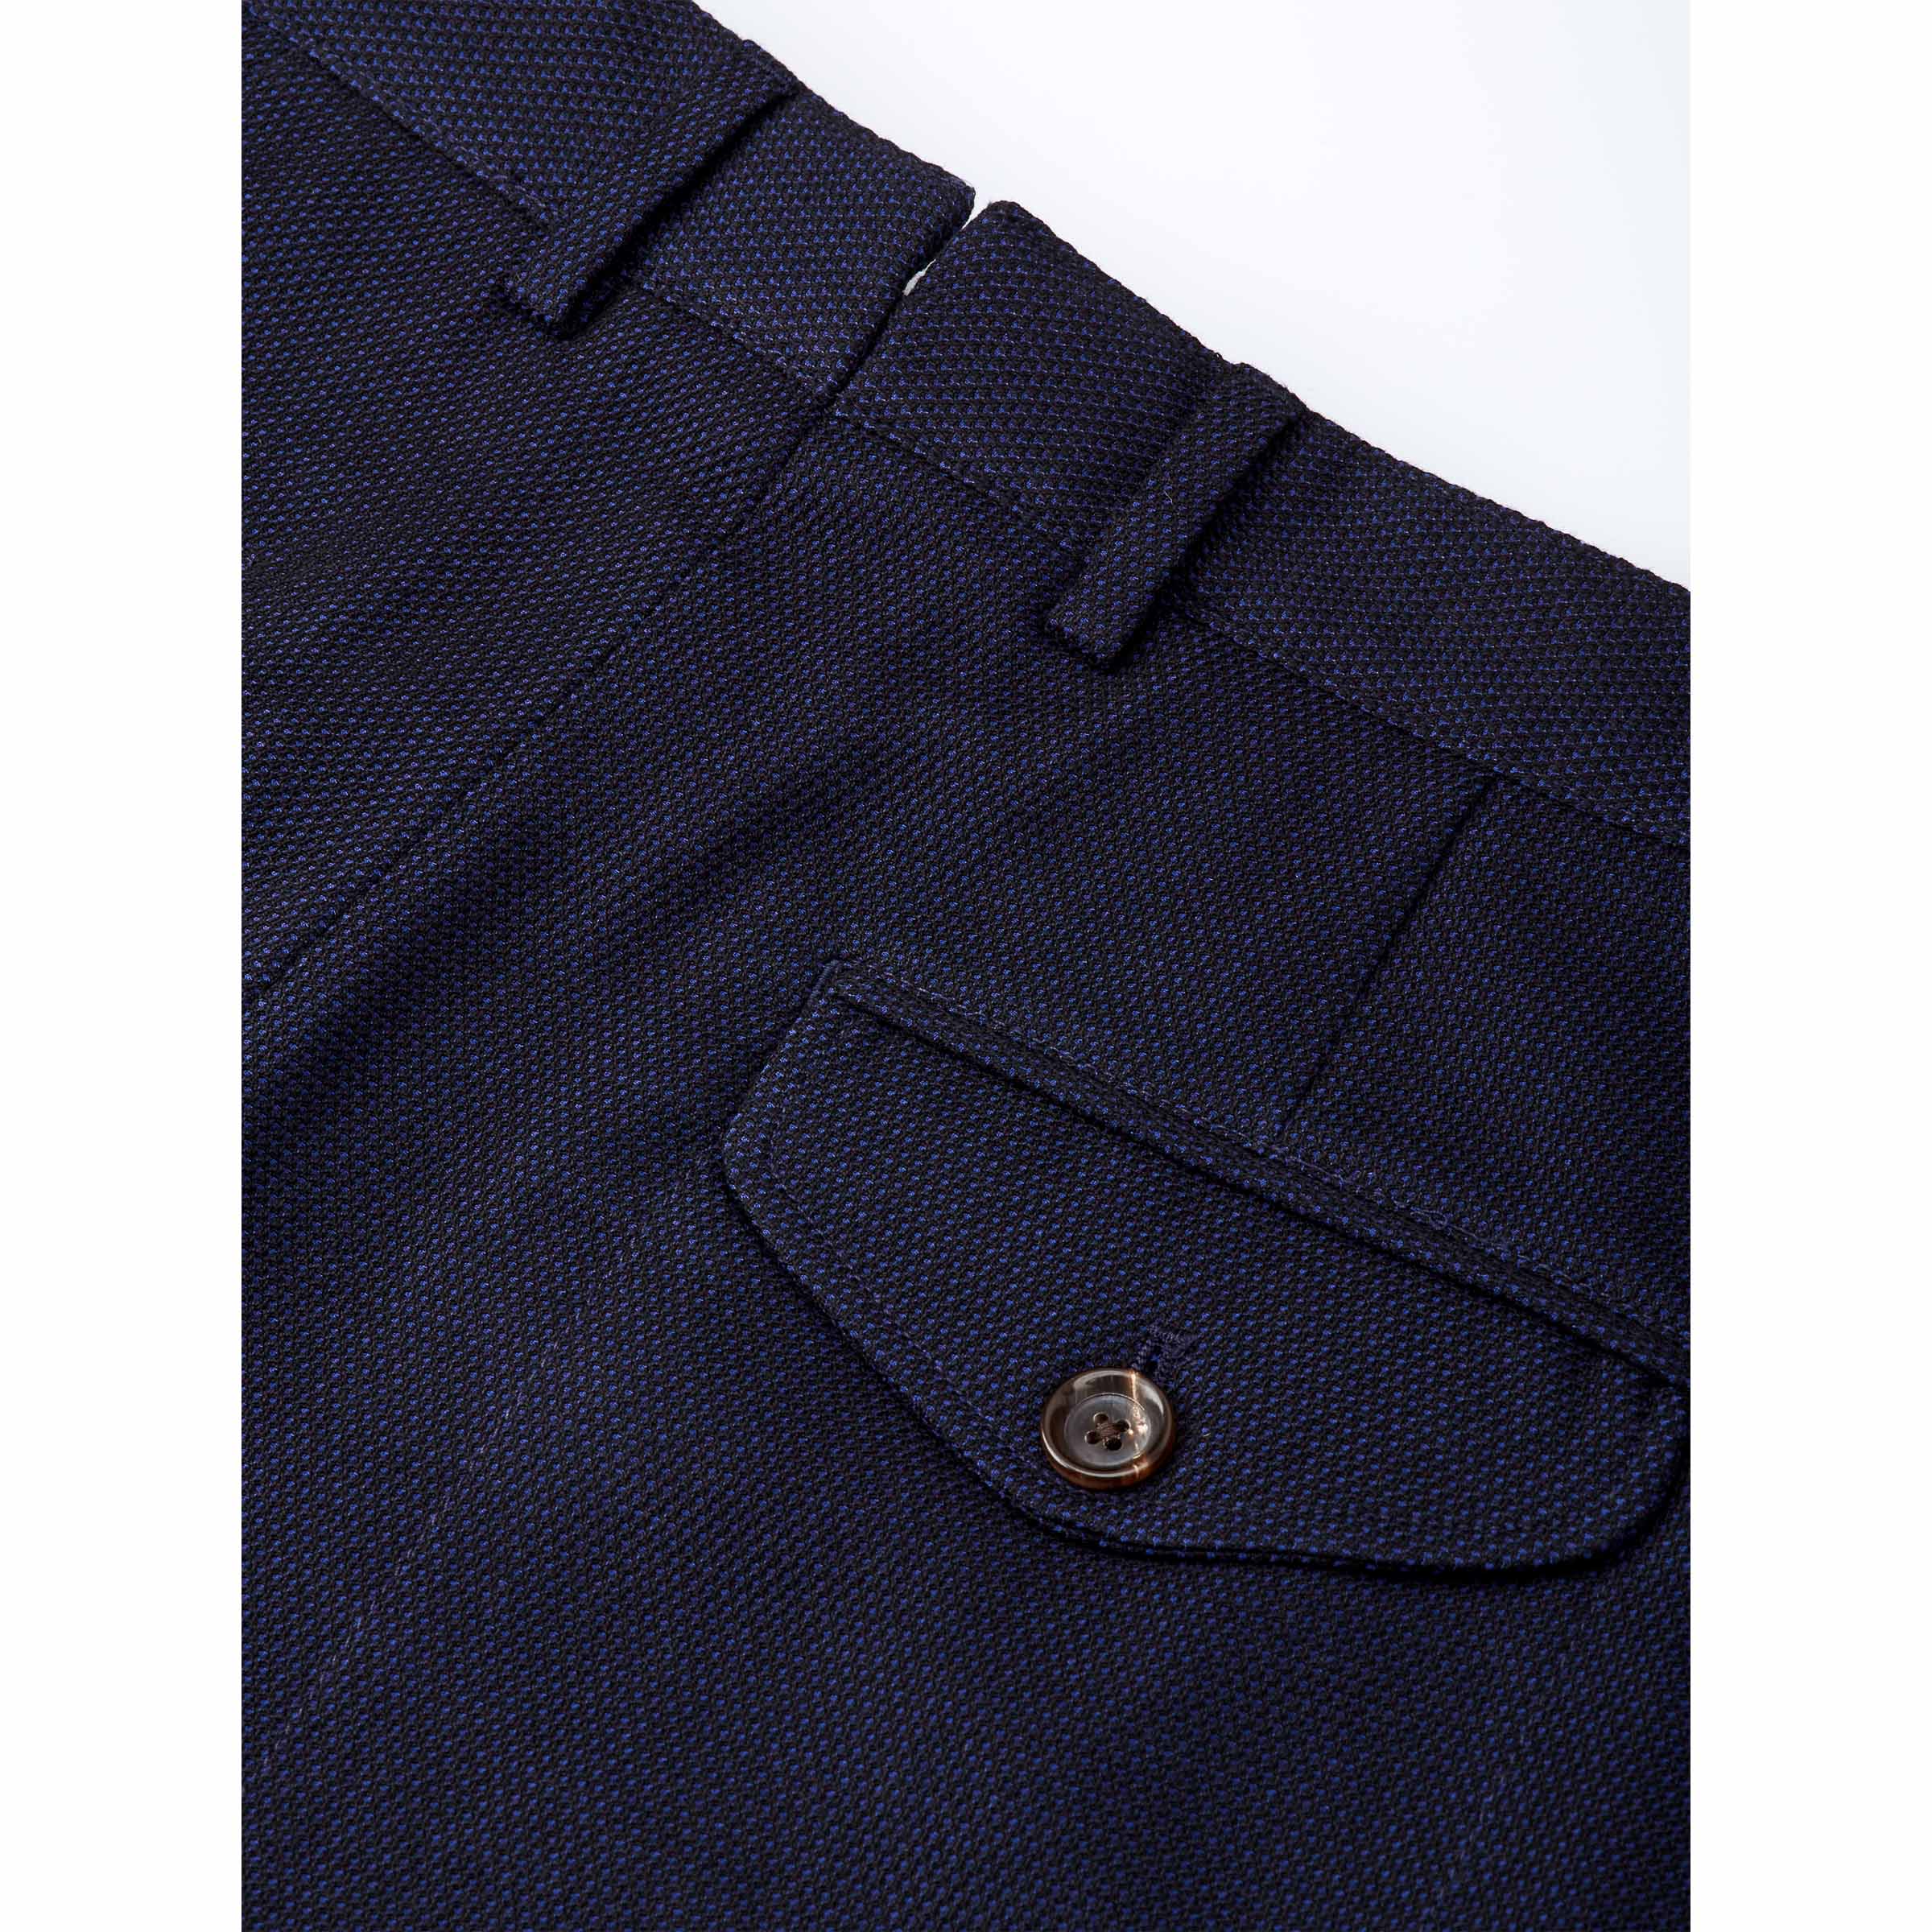 Original 1920s British Black Barathea Wool Fishtail Back Trousers